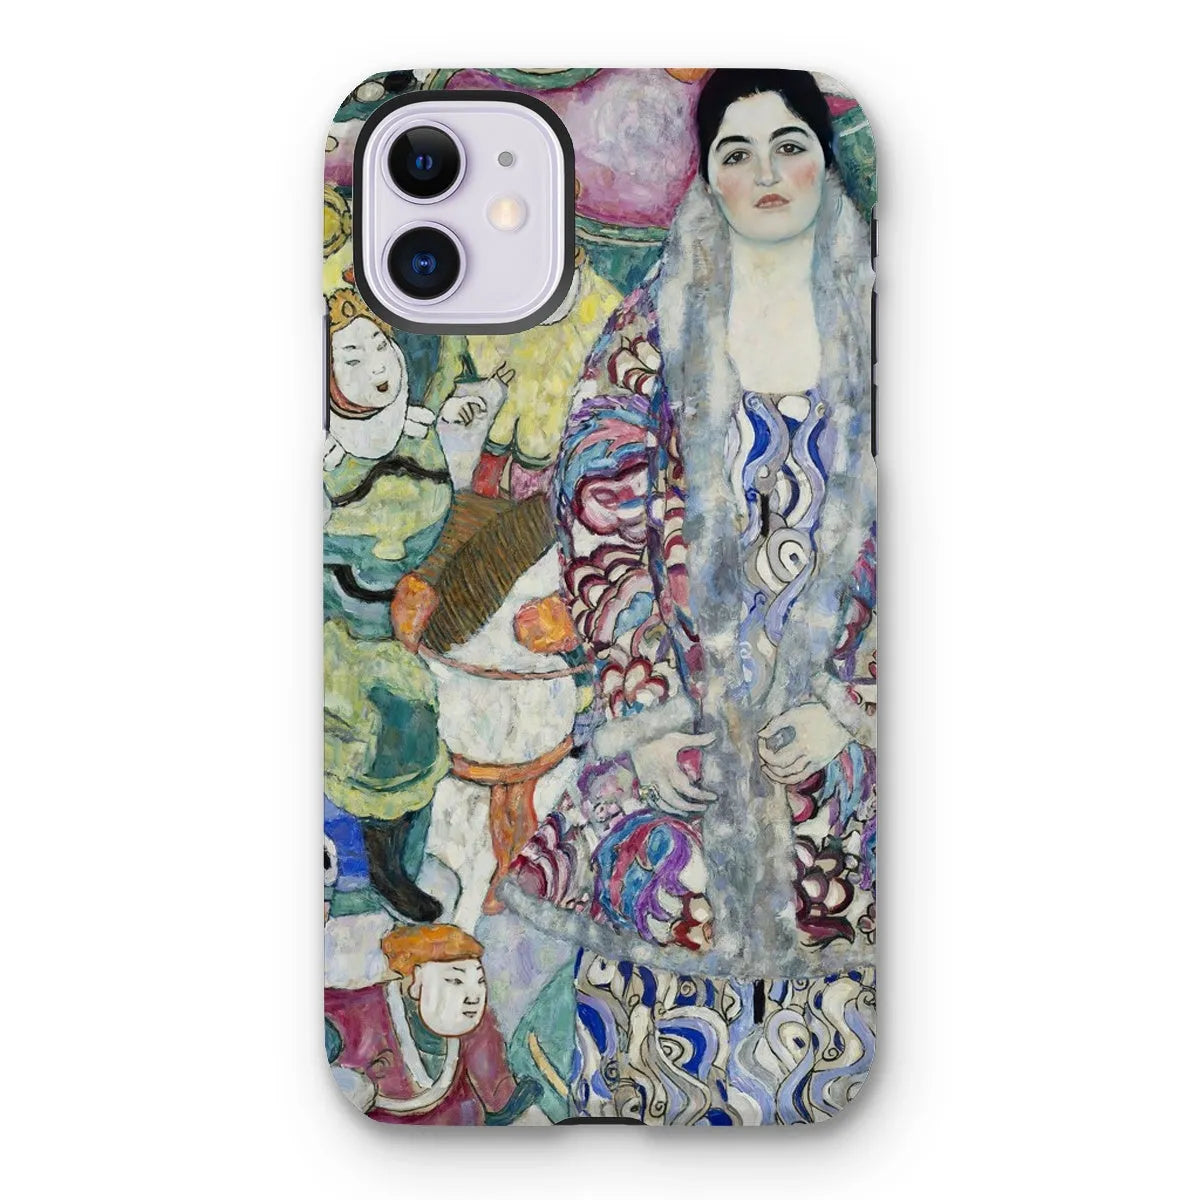 Friederike Maria Beer - Viennese Art Phone Case - Gustav Klimt - Iphone 11 / Matte - Mobile Phone Cases - Aesthetic Art